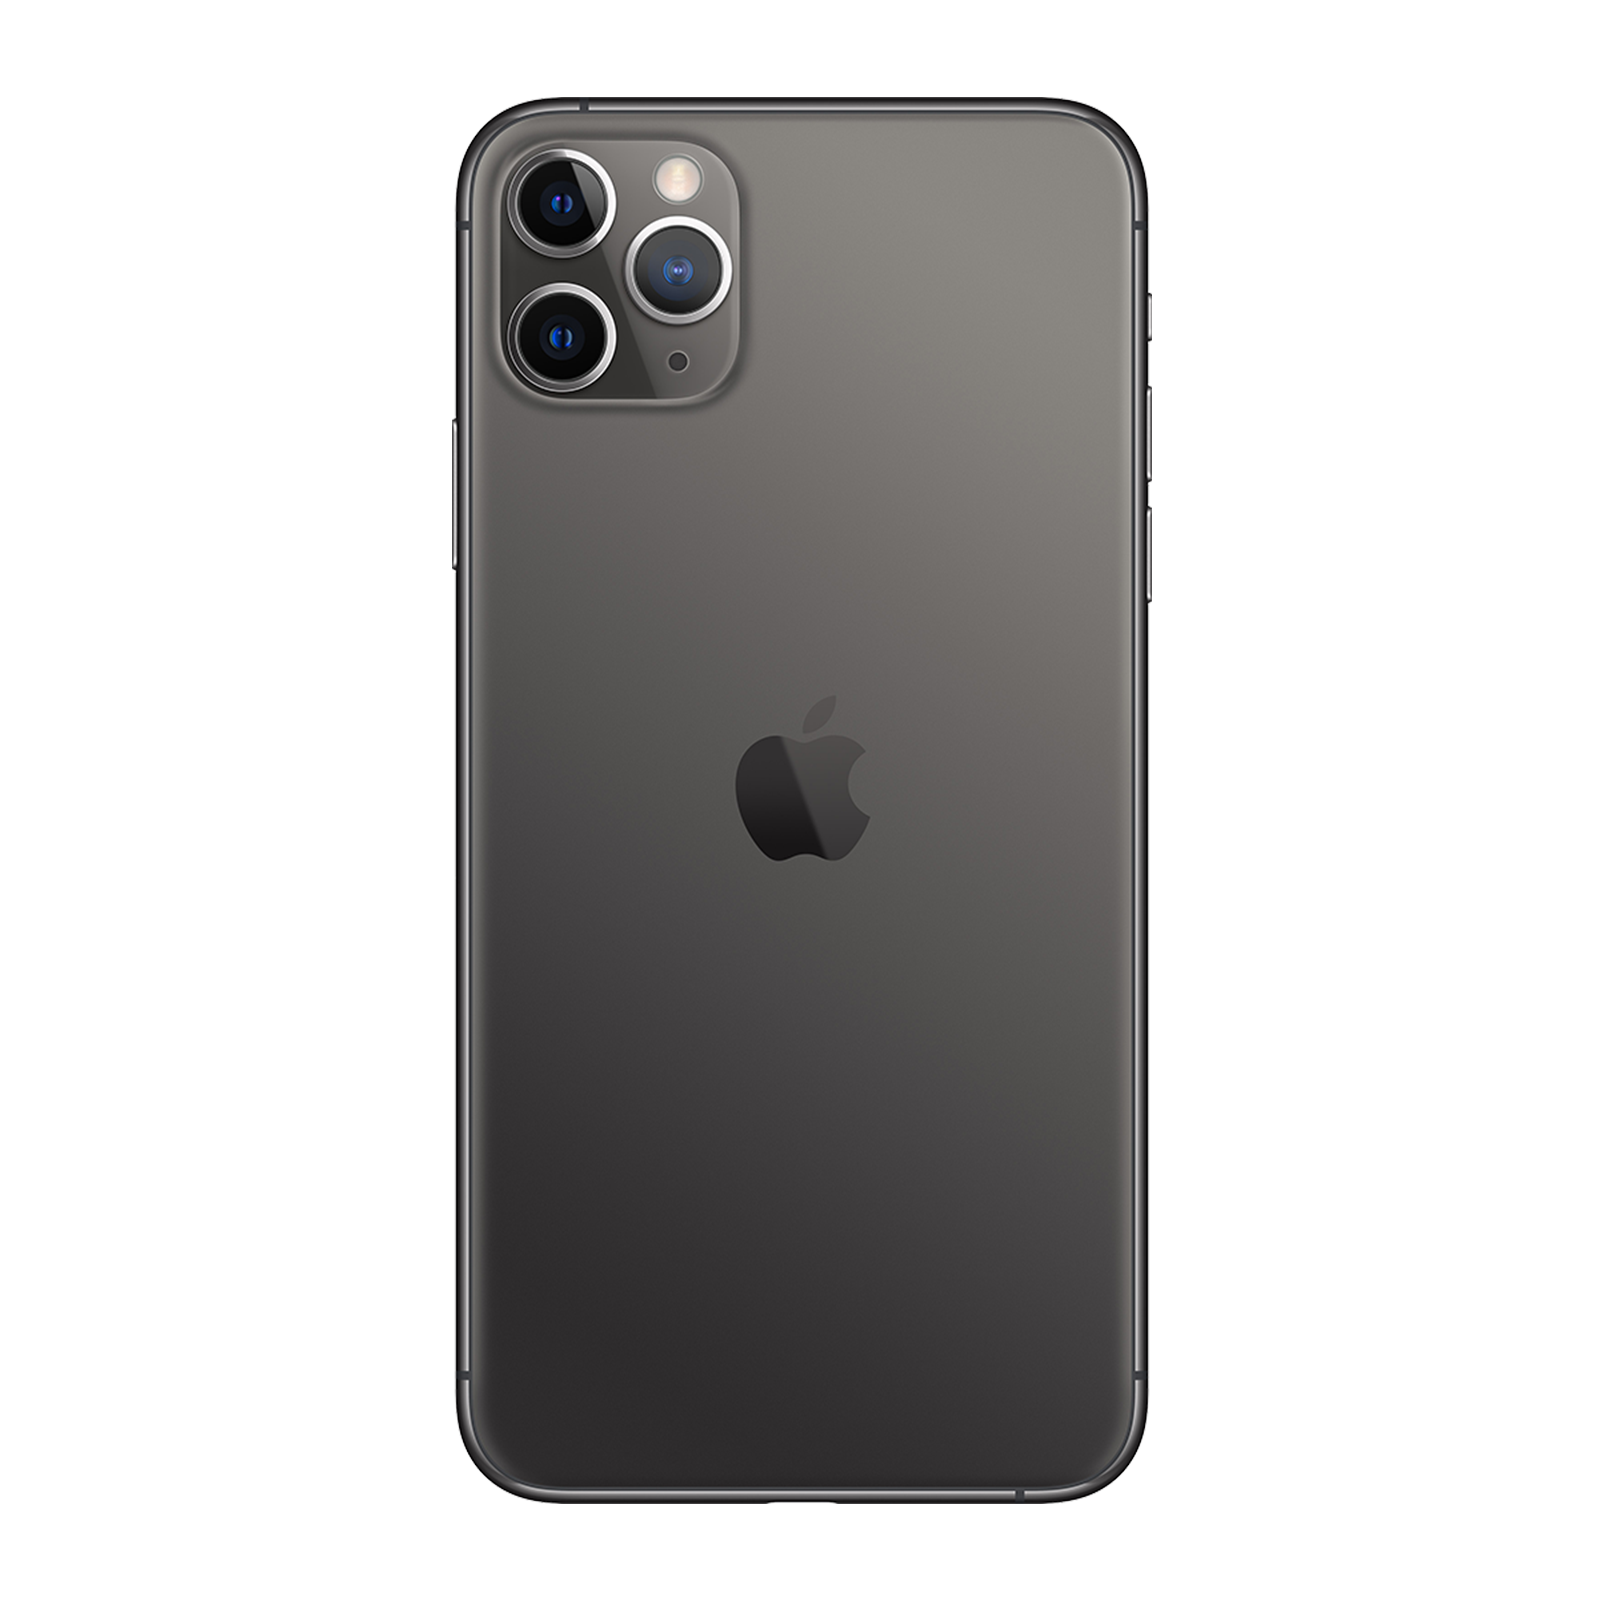 Apple iPhone 11 Pro Max 64GB Space Grey Fair - Unlocked